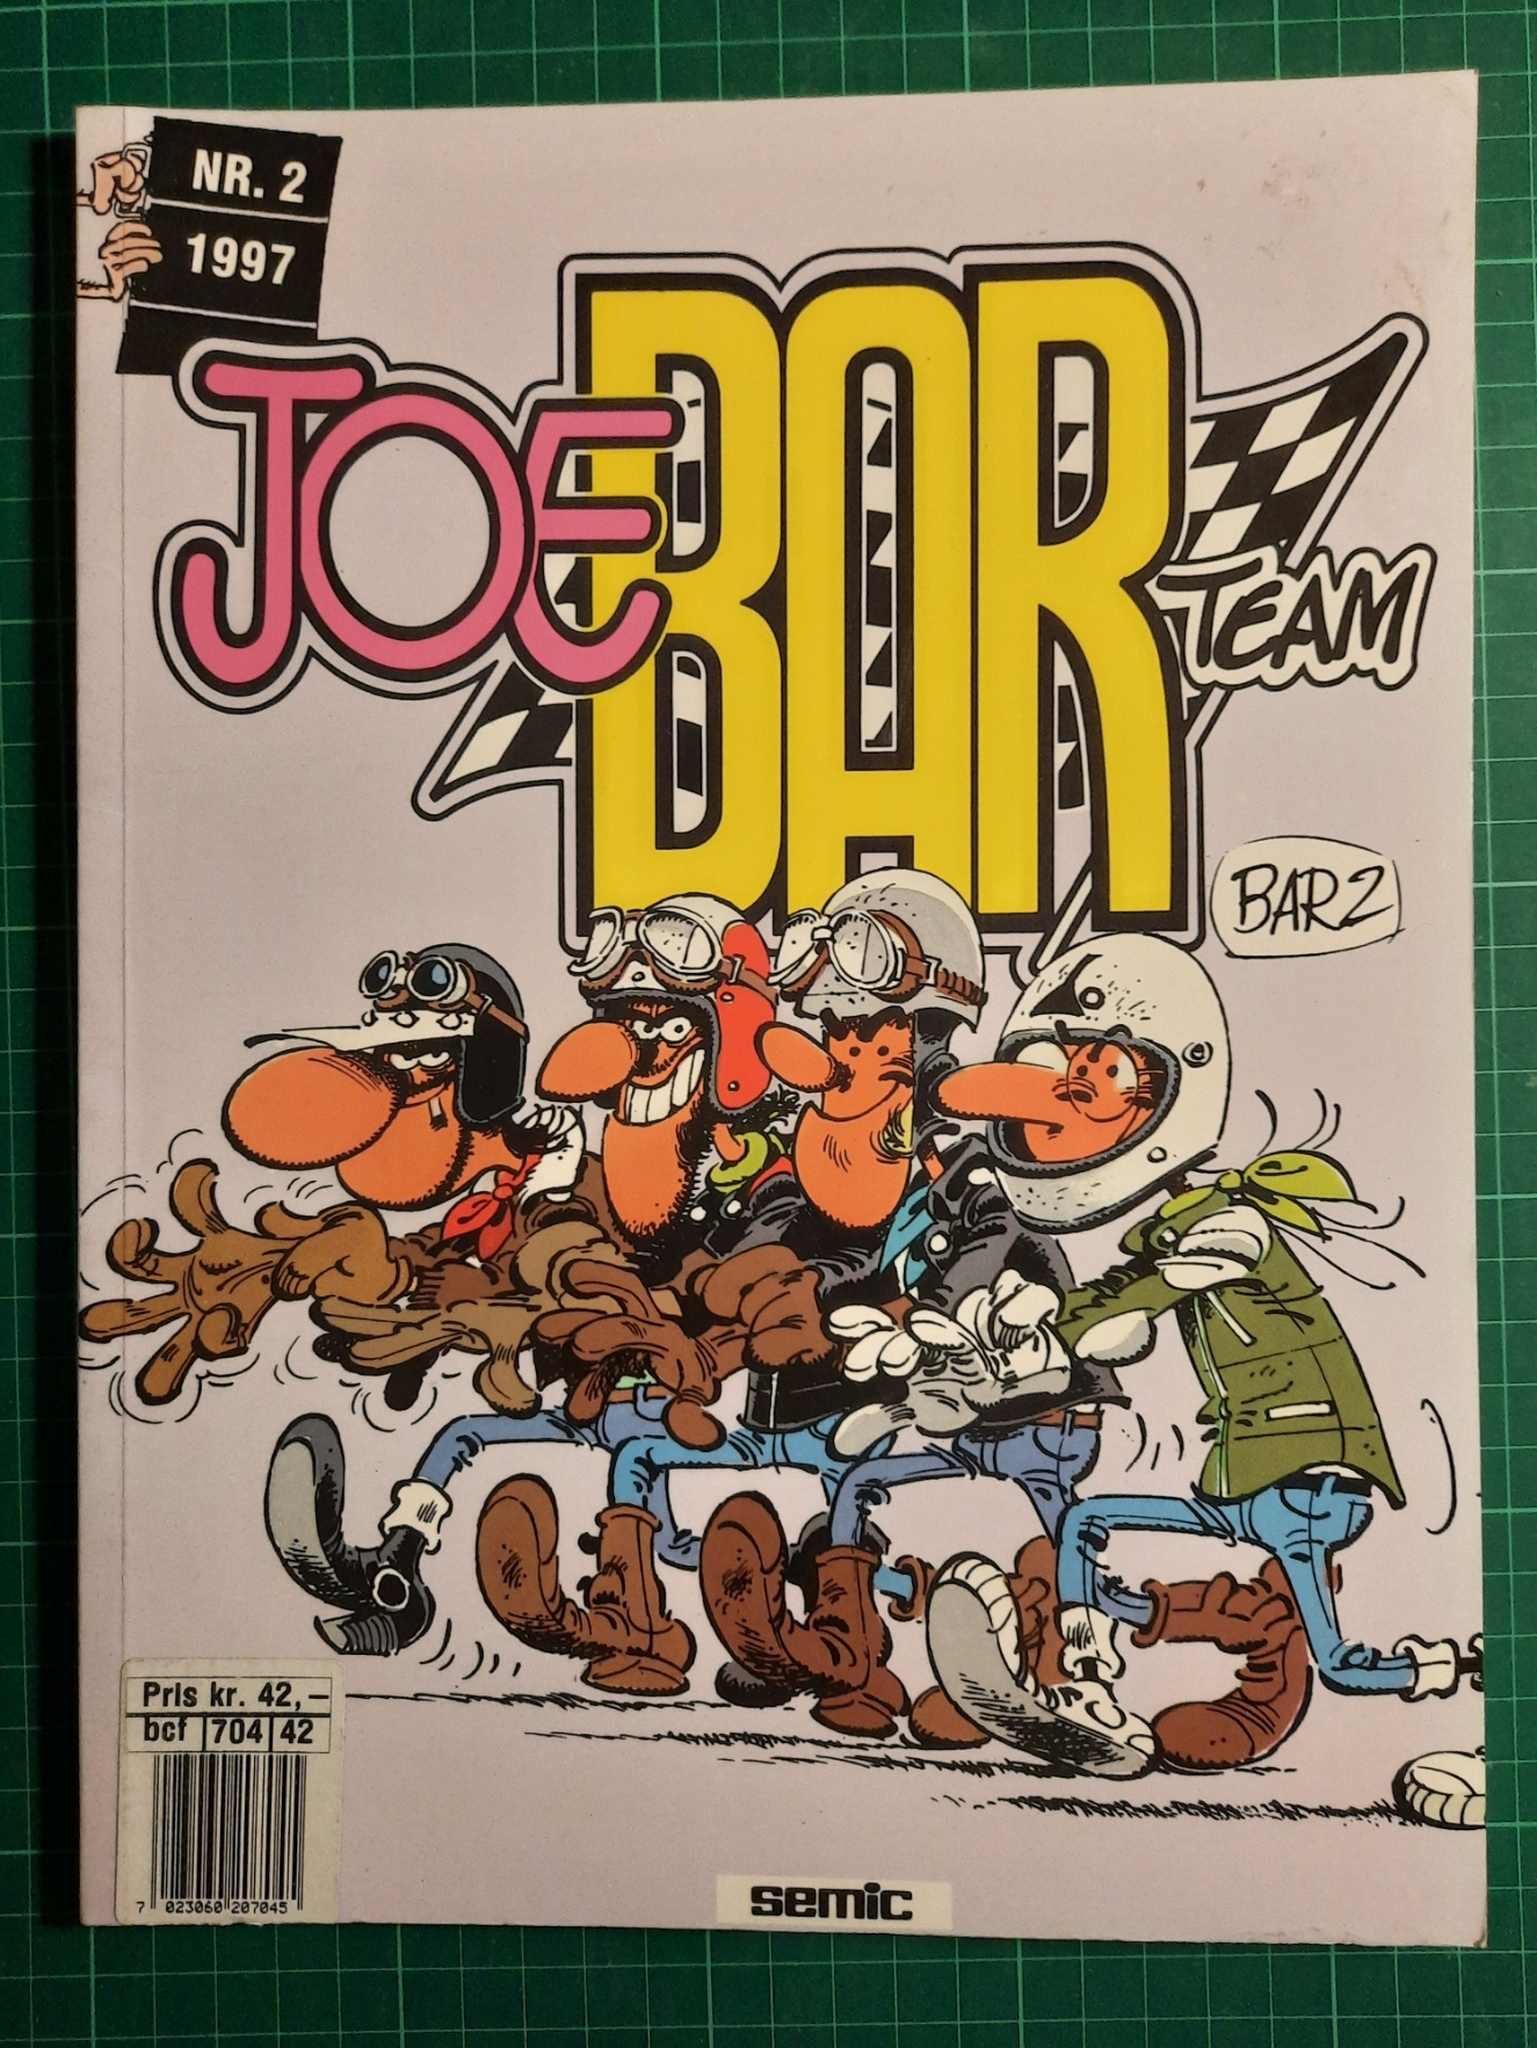 Joe Bar team 2